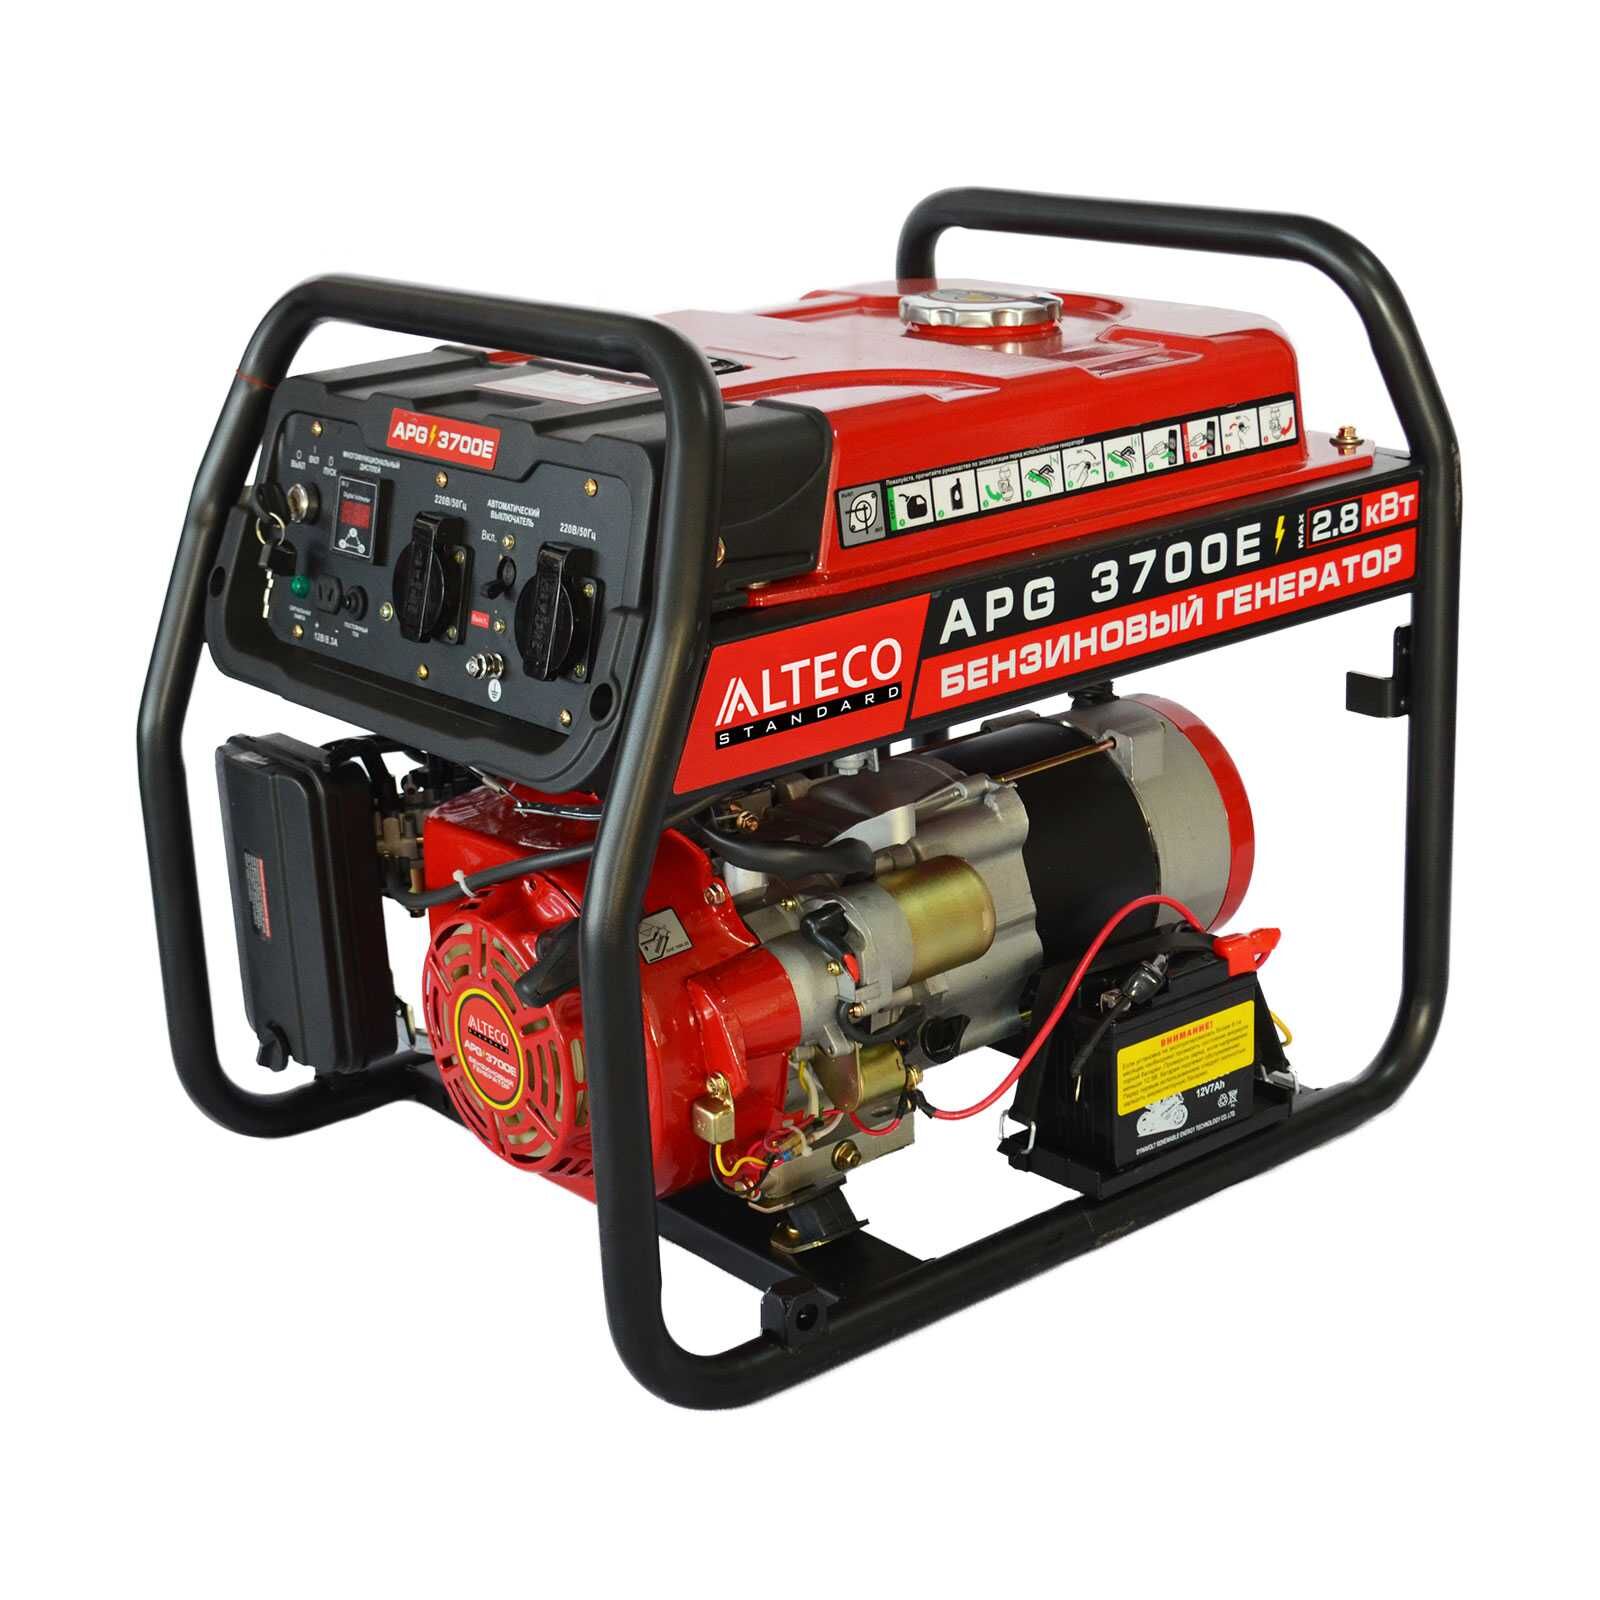 Бензиновый генератор APG 3700E (N) ALTECO Standard Alteco